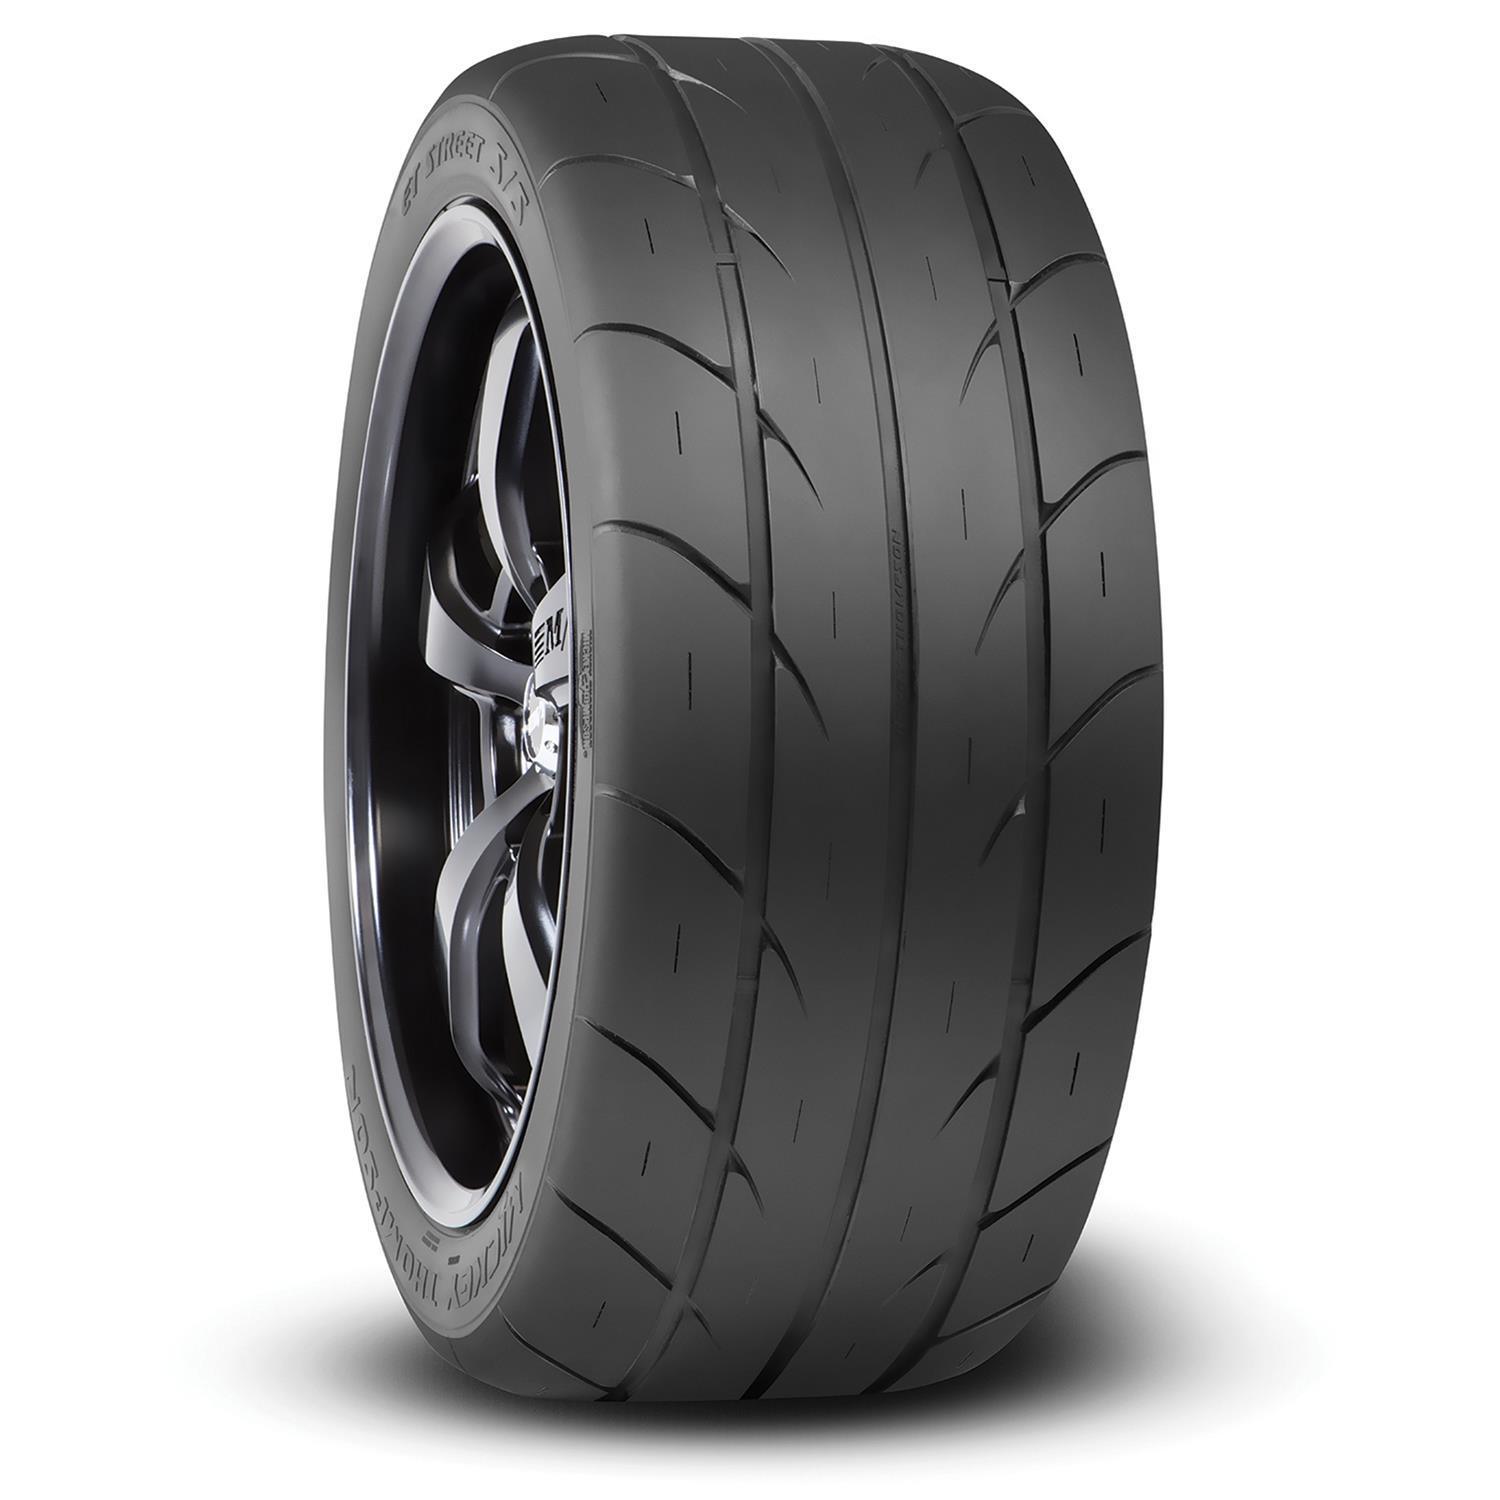 P305/35R18 ET Street S/S Tire - Burlile Performance Products